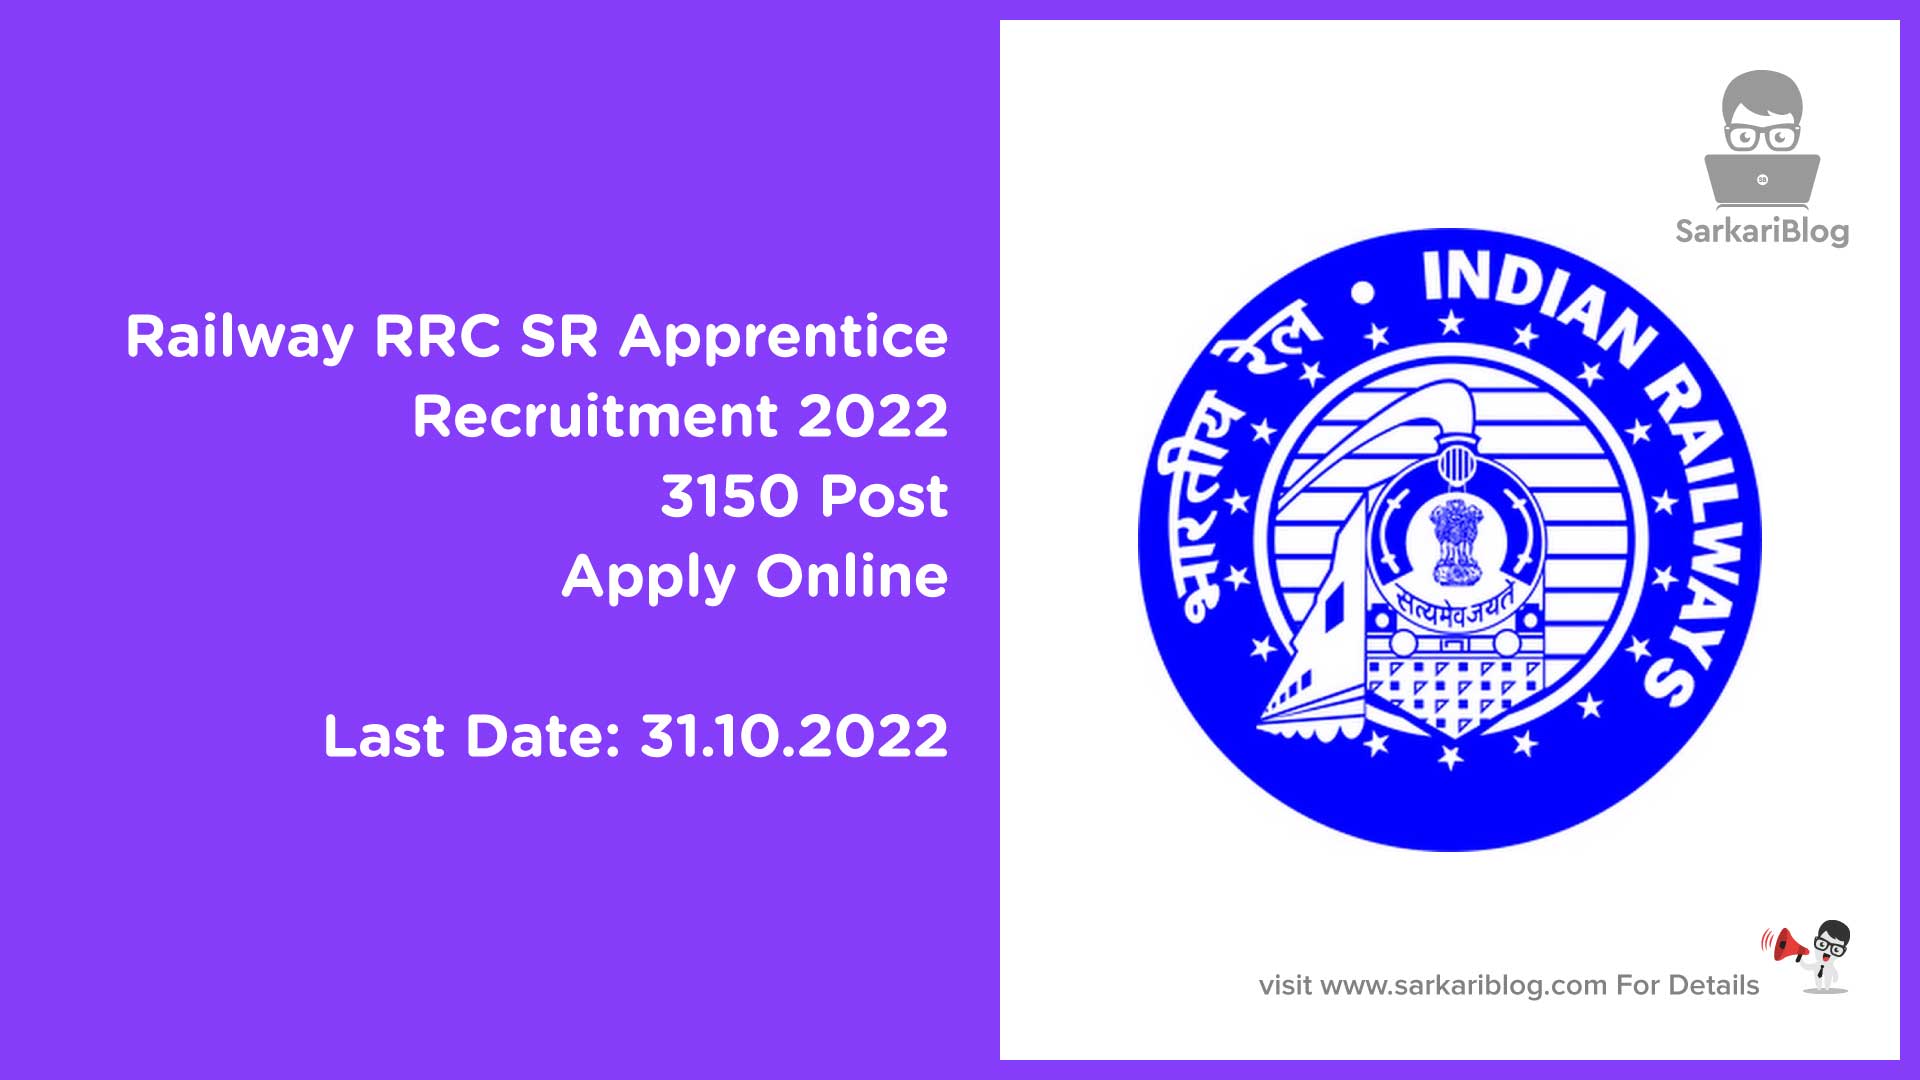 Railway RRC SR Apprentice Recruitment 2022